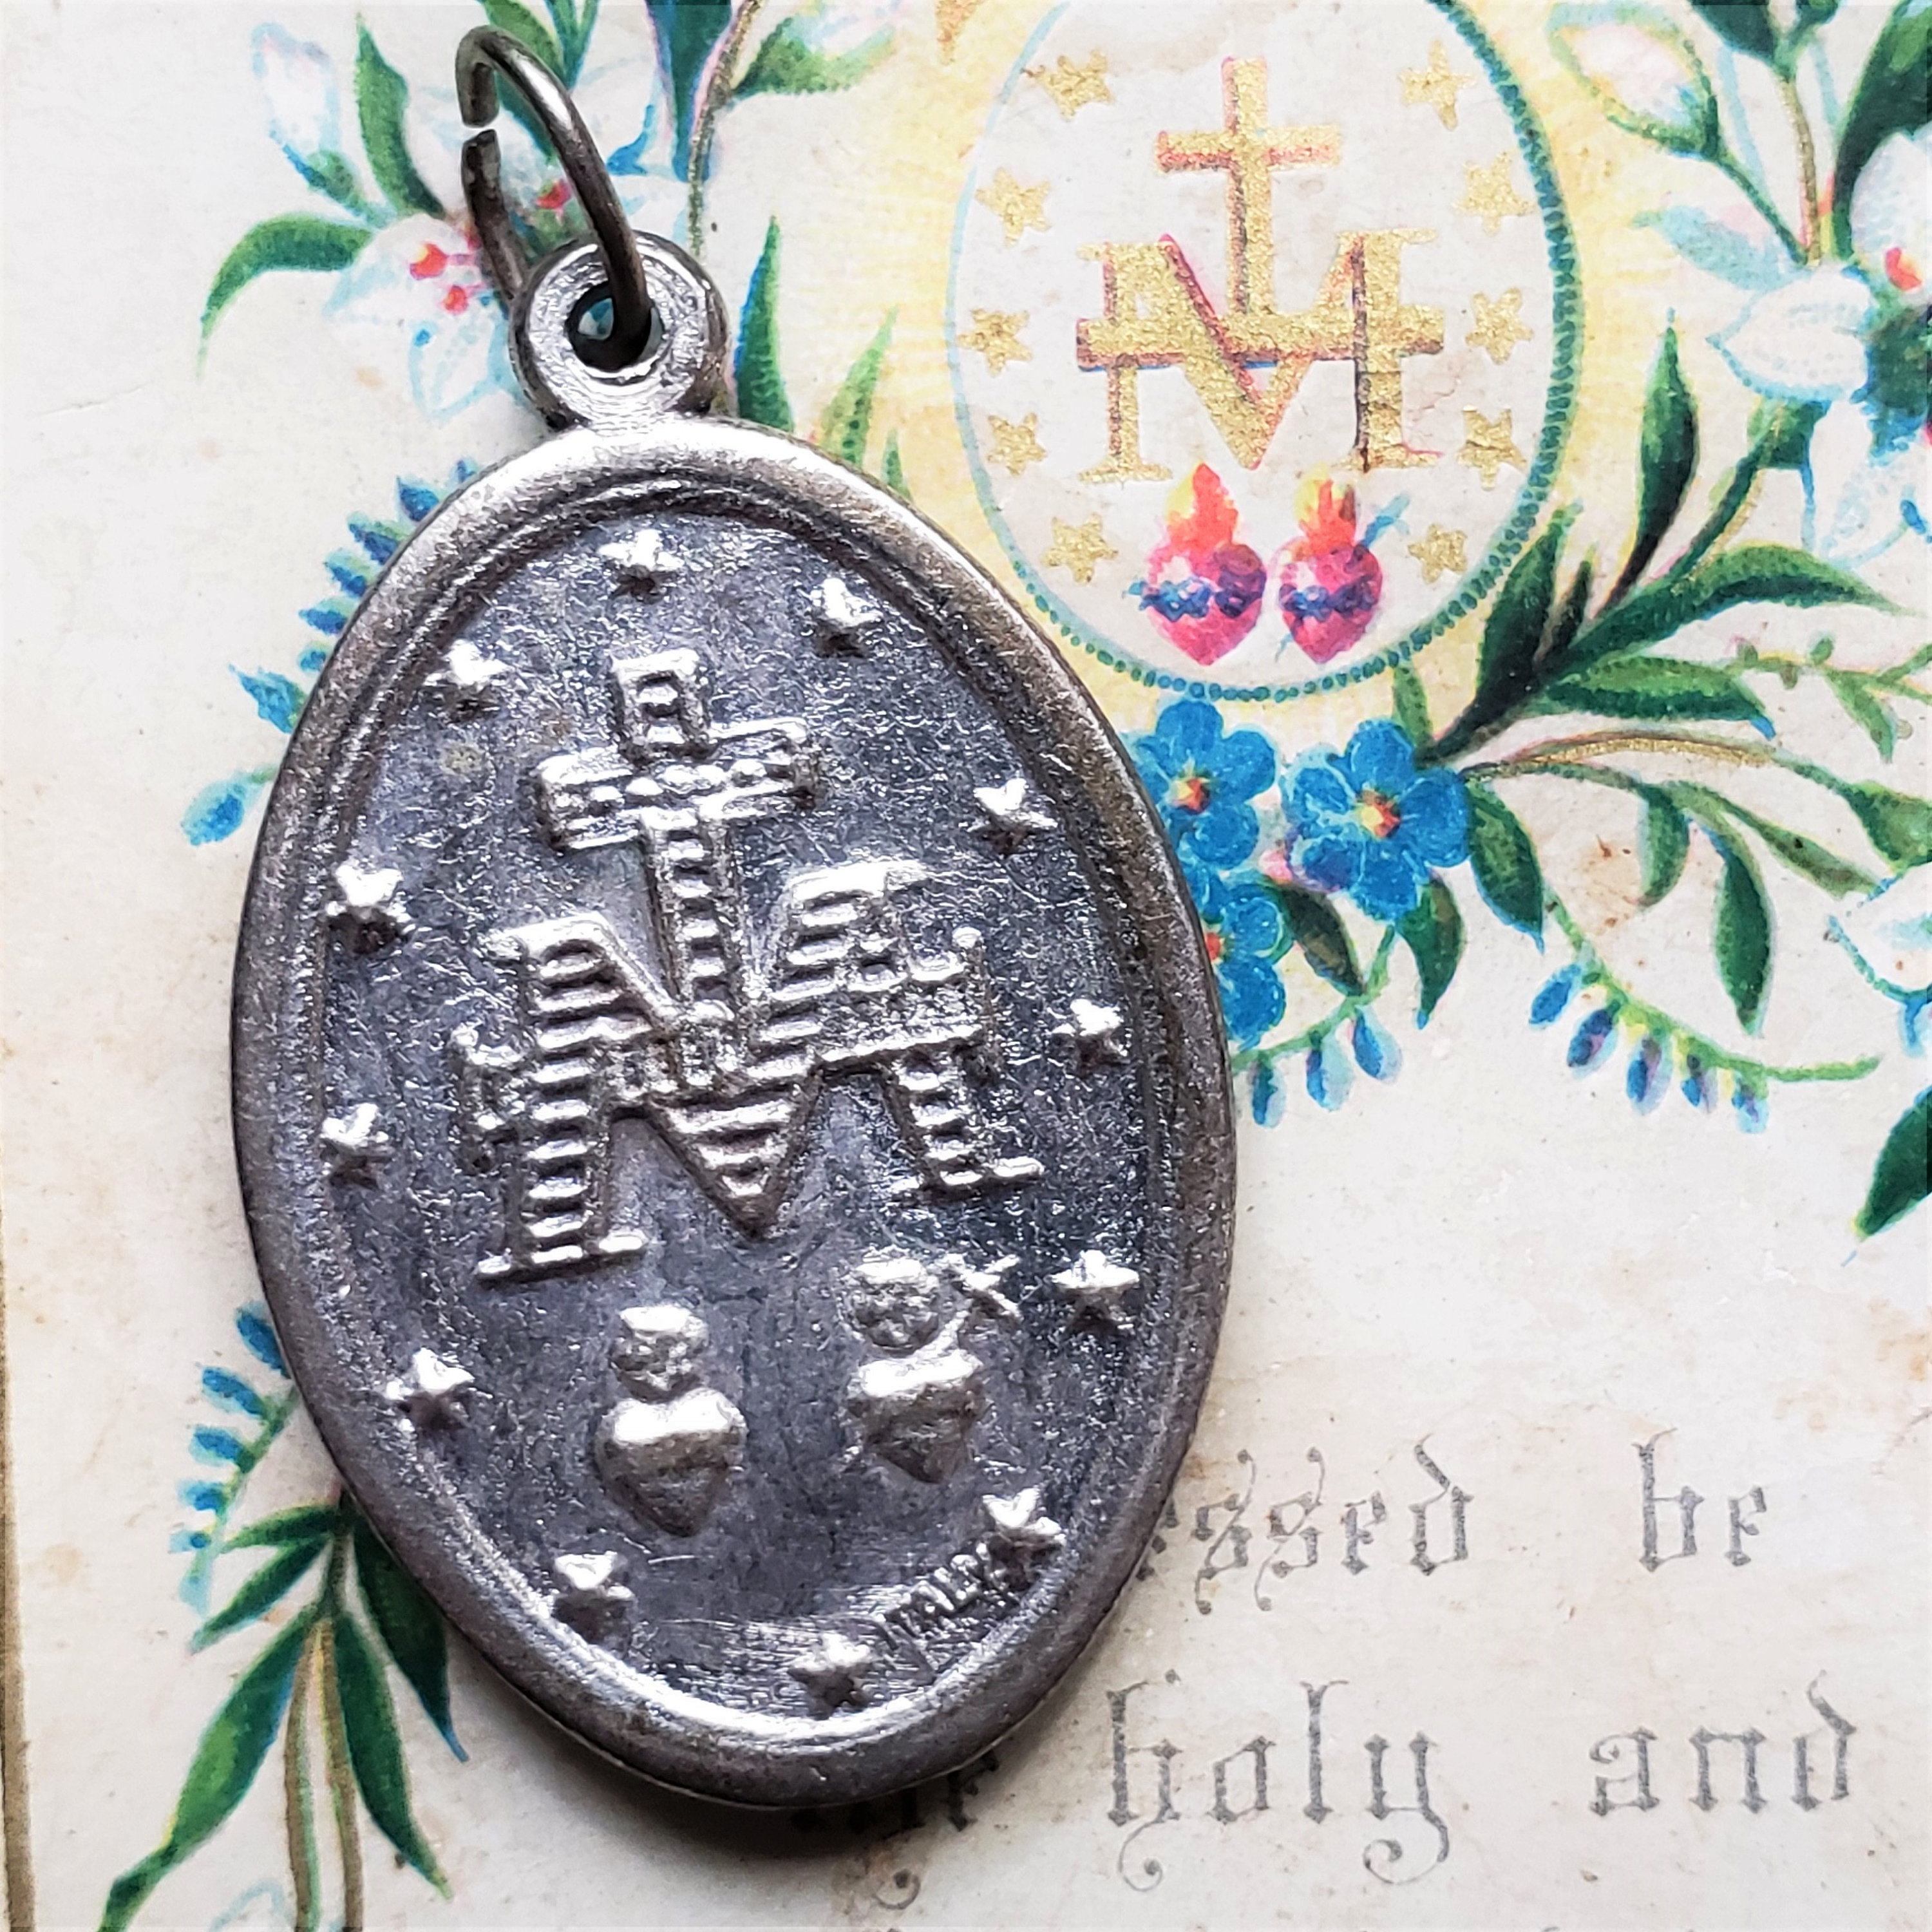 Medalla Milagrosa Pequeña - Colgante Esmalte Azul - Virgen María -  Santísima – Catholically